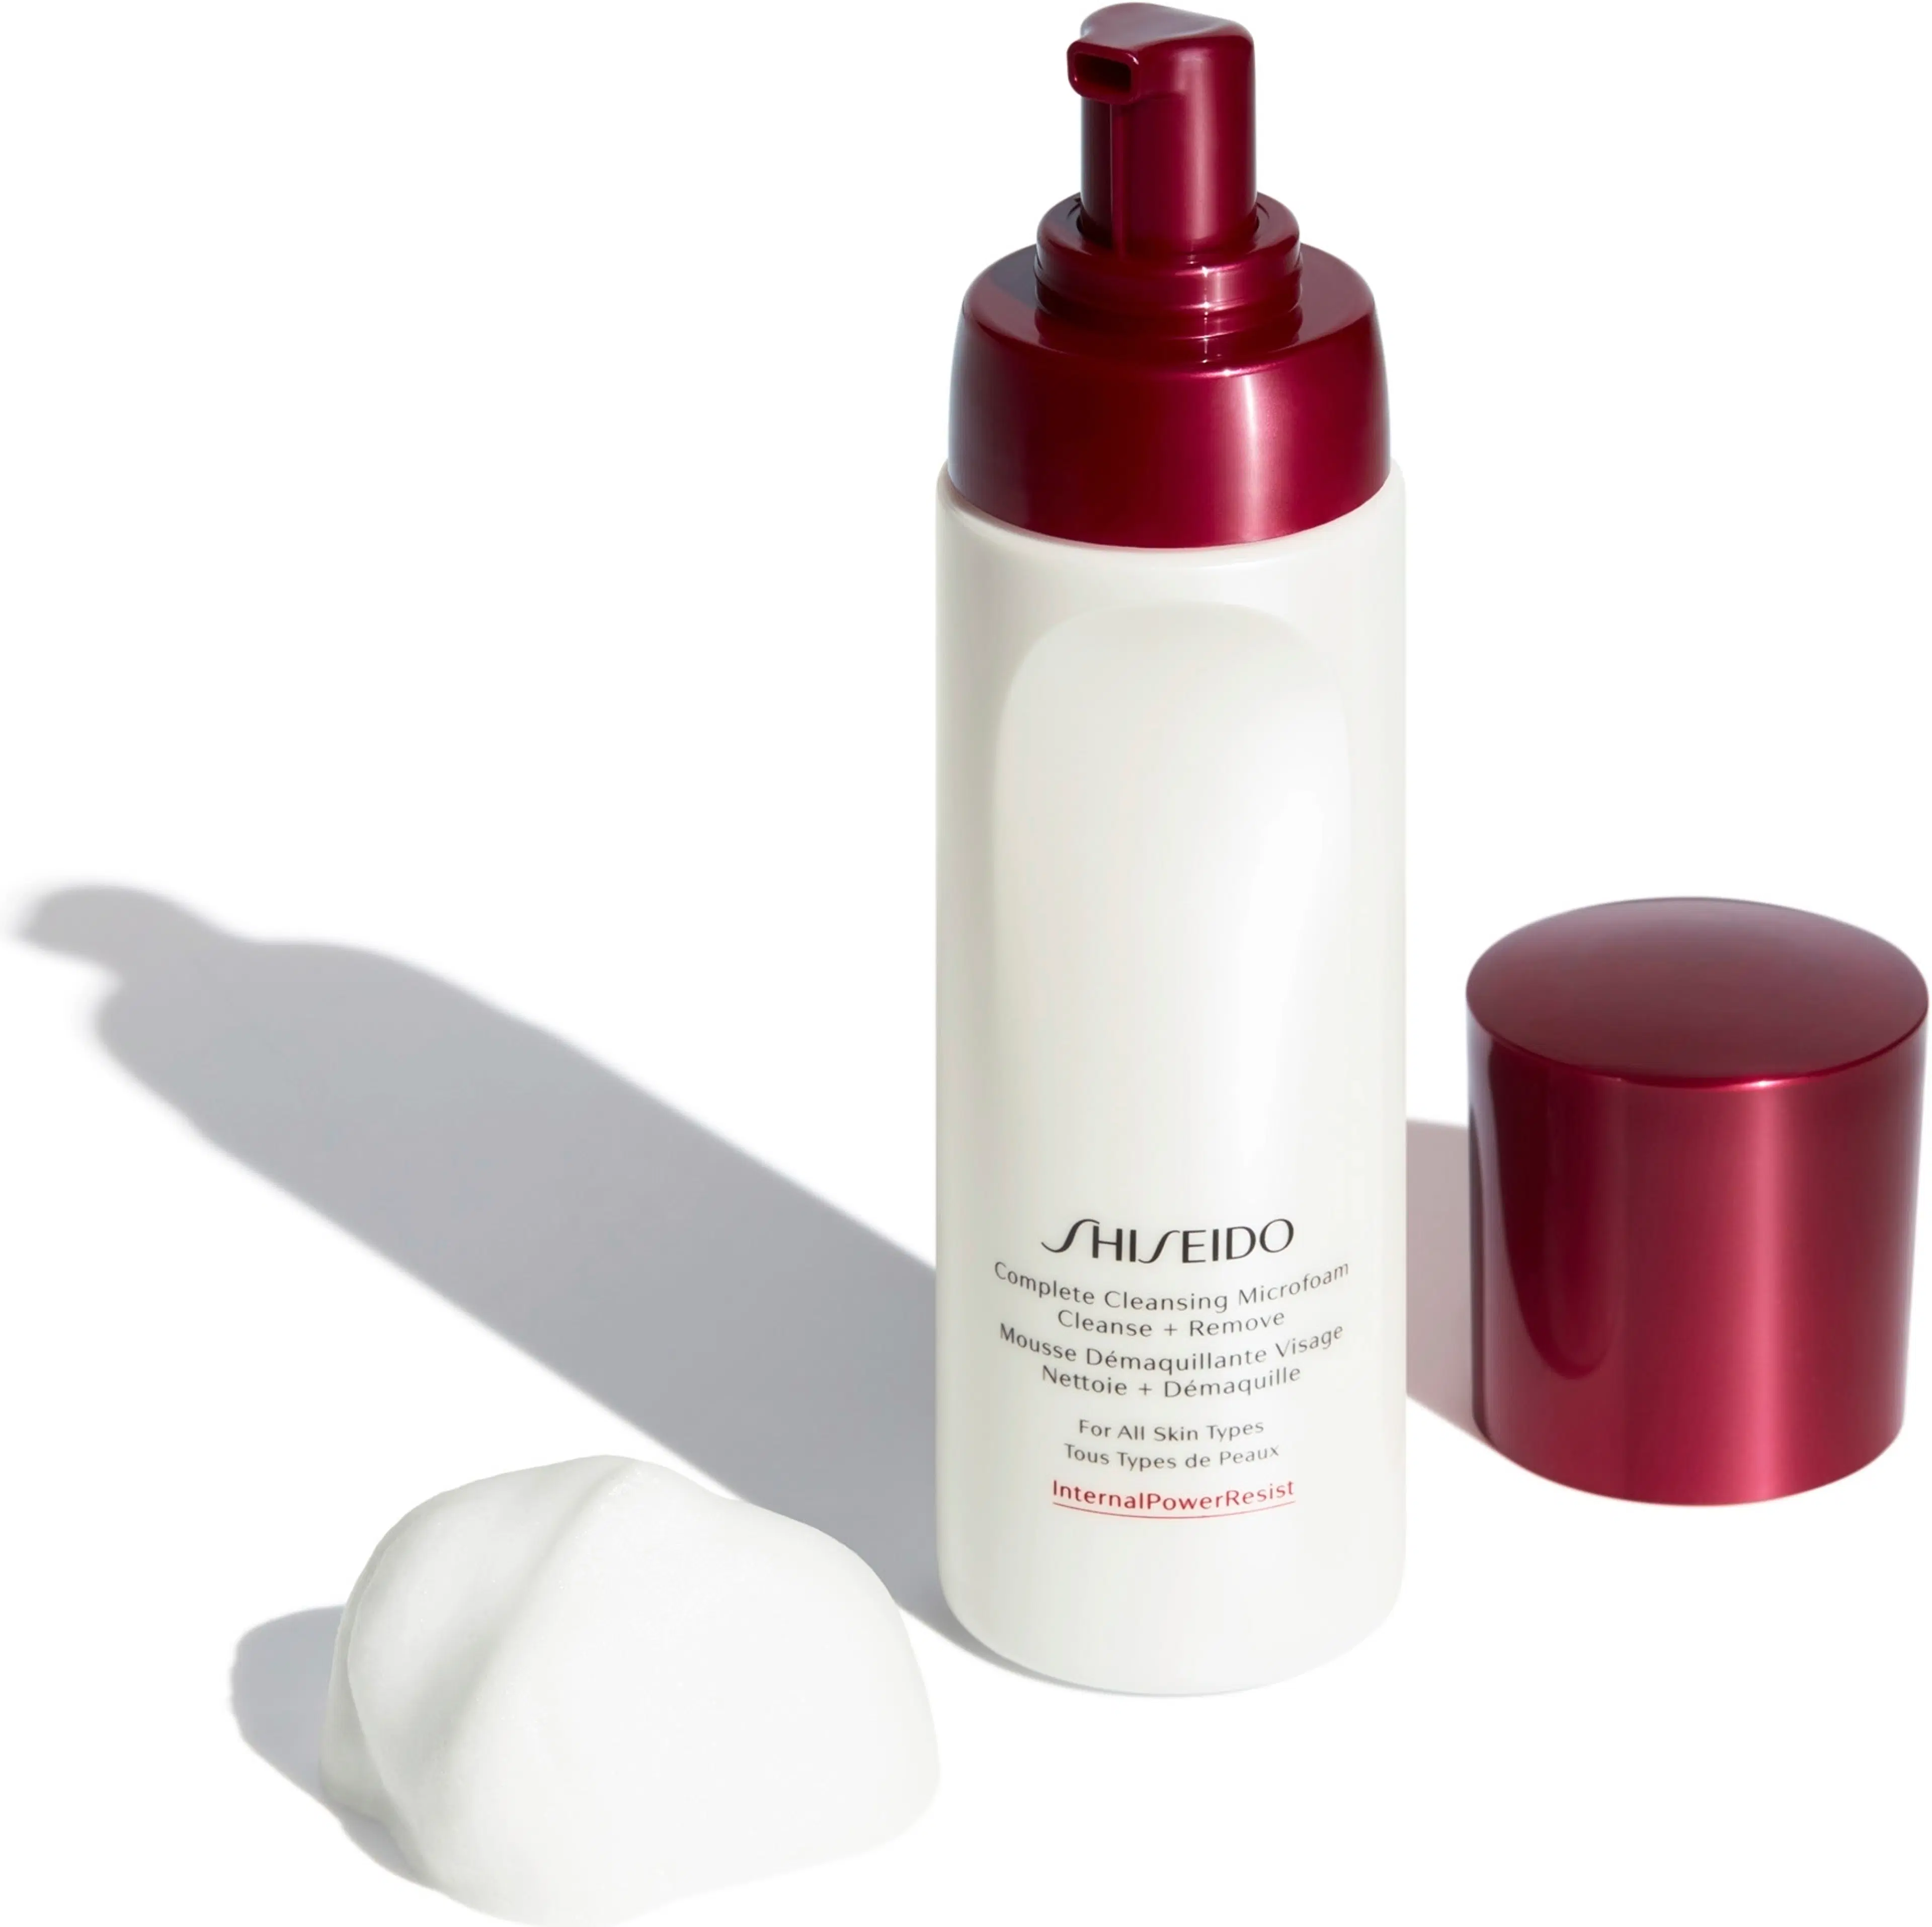 Shiseido Complete Cleansing Microfoam puhdistusvaahto 180 ml